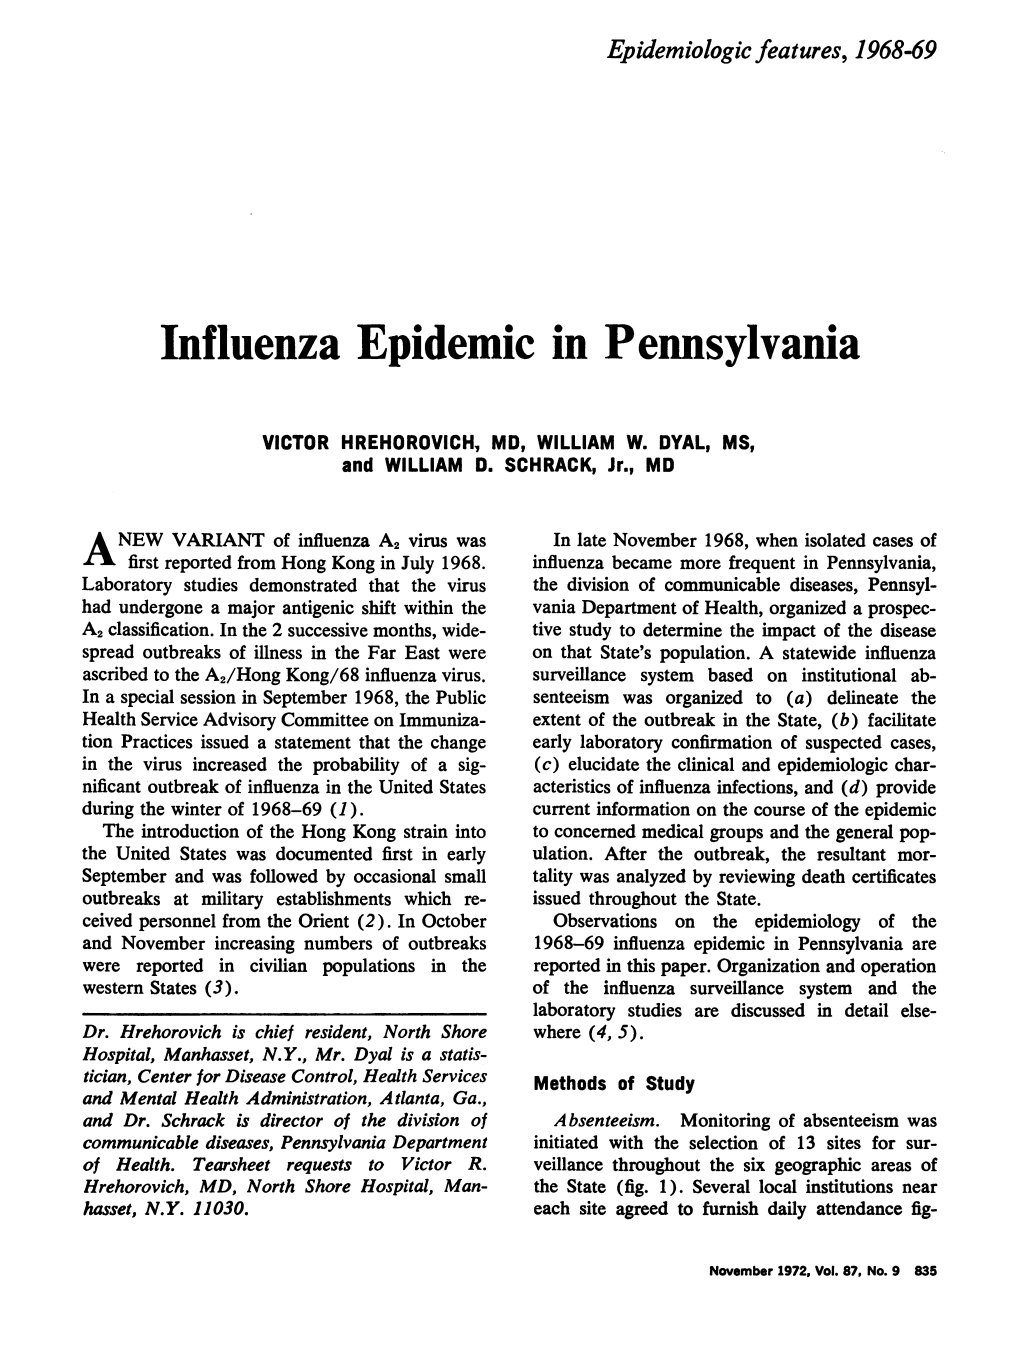 Influenza Epidemic in Pennsylvania